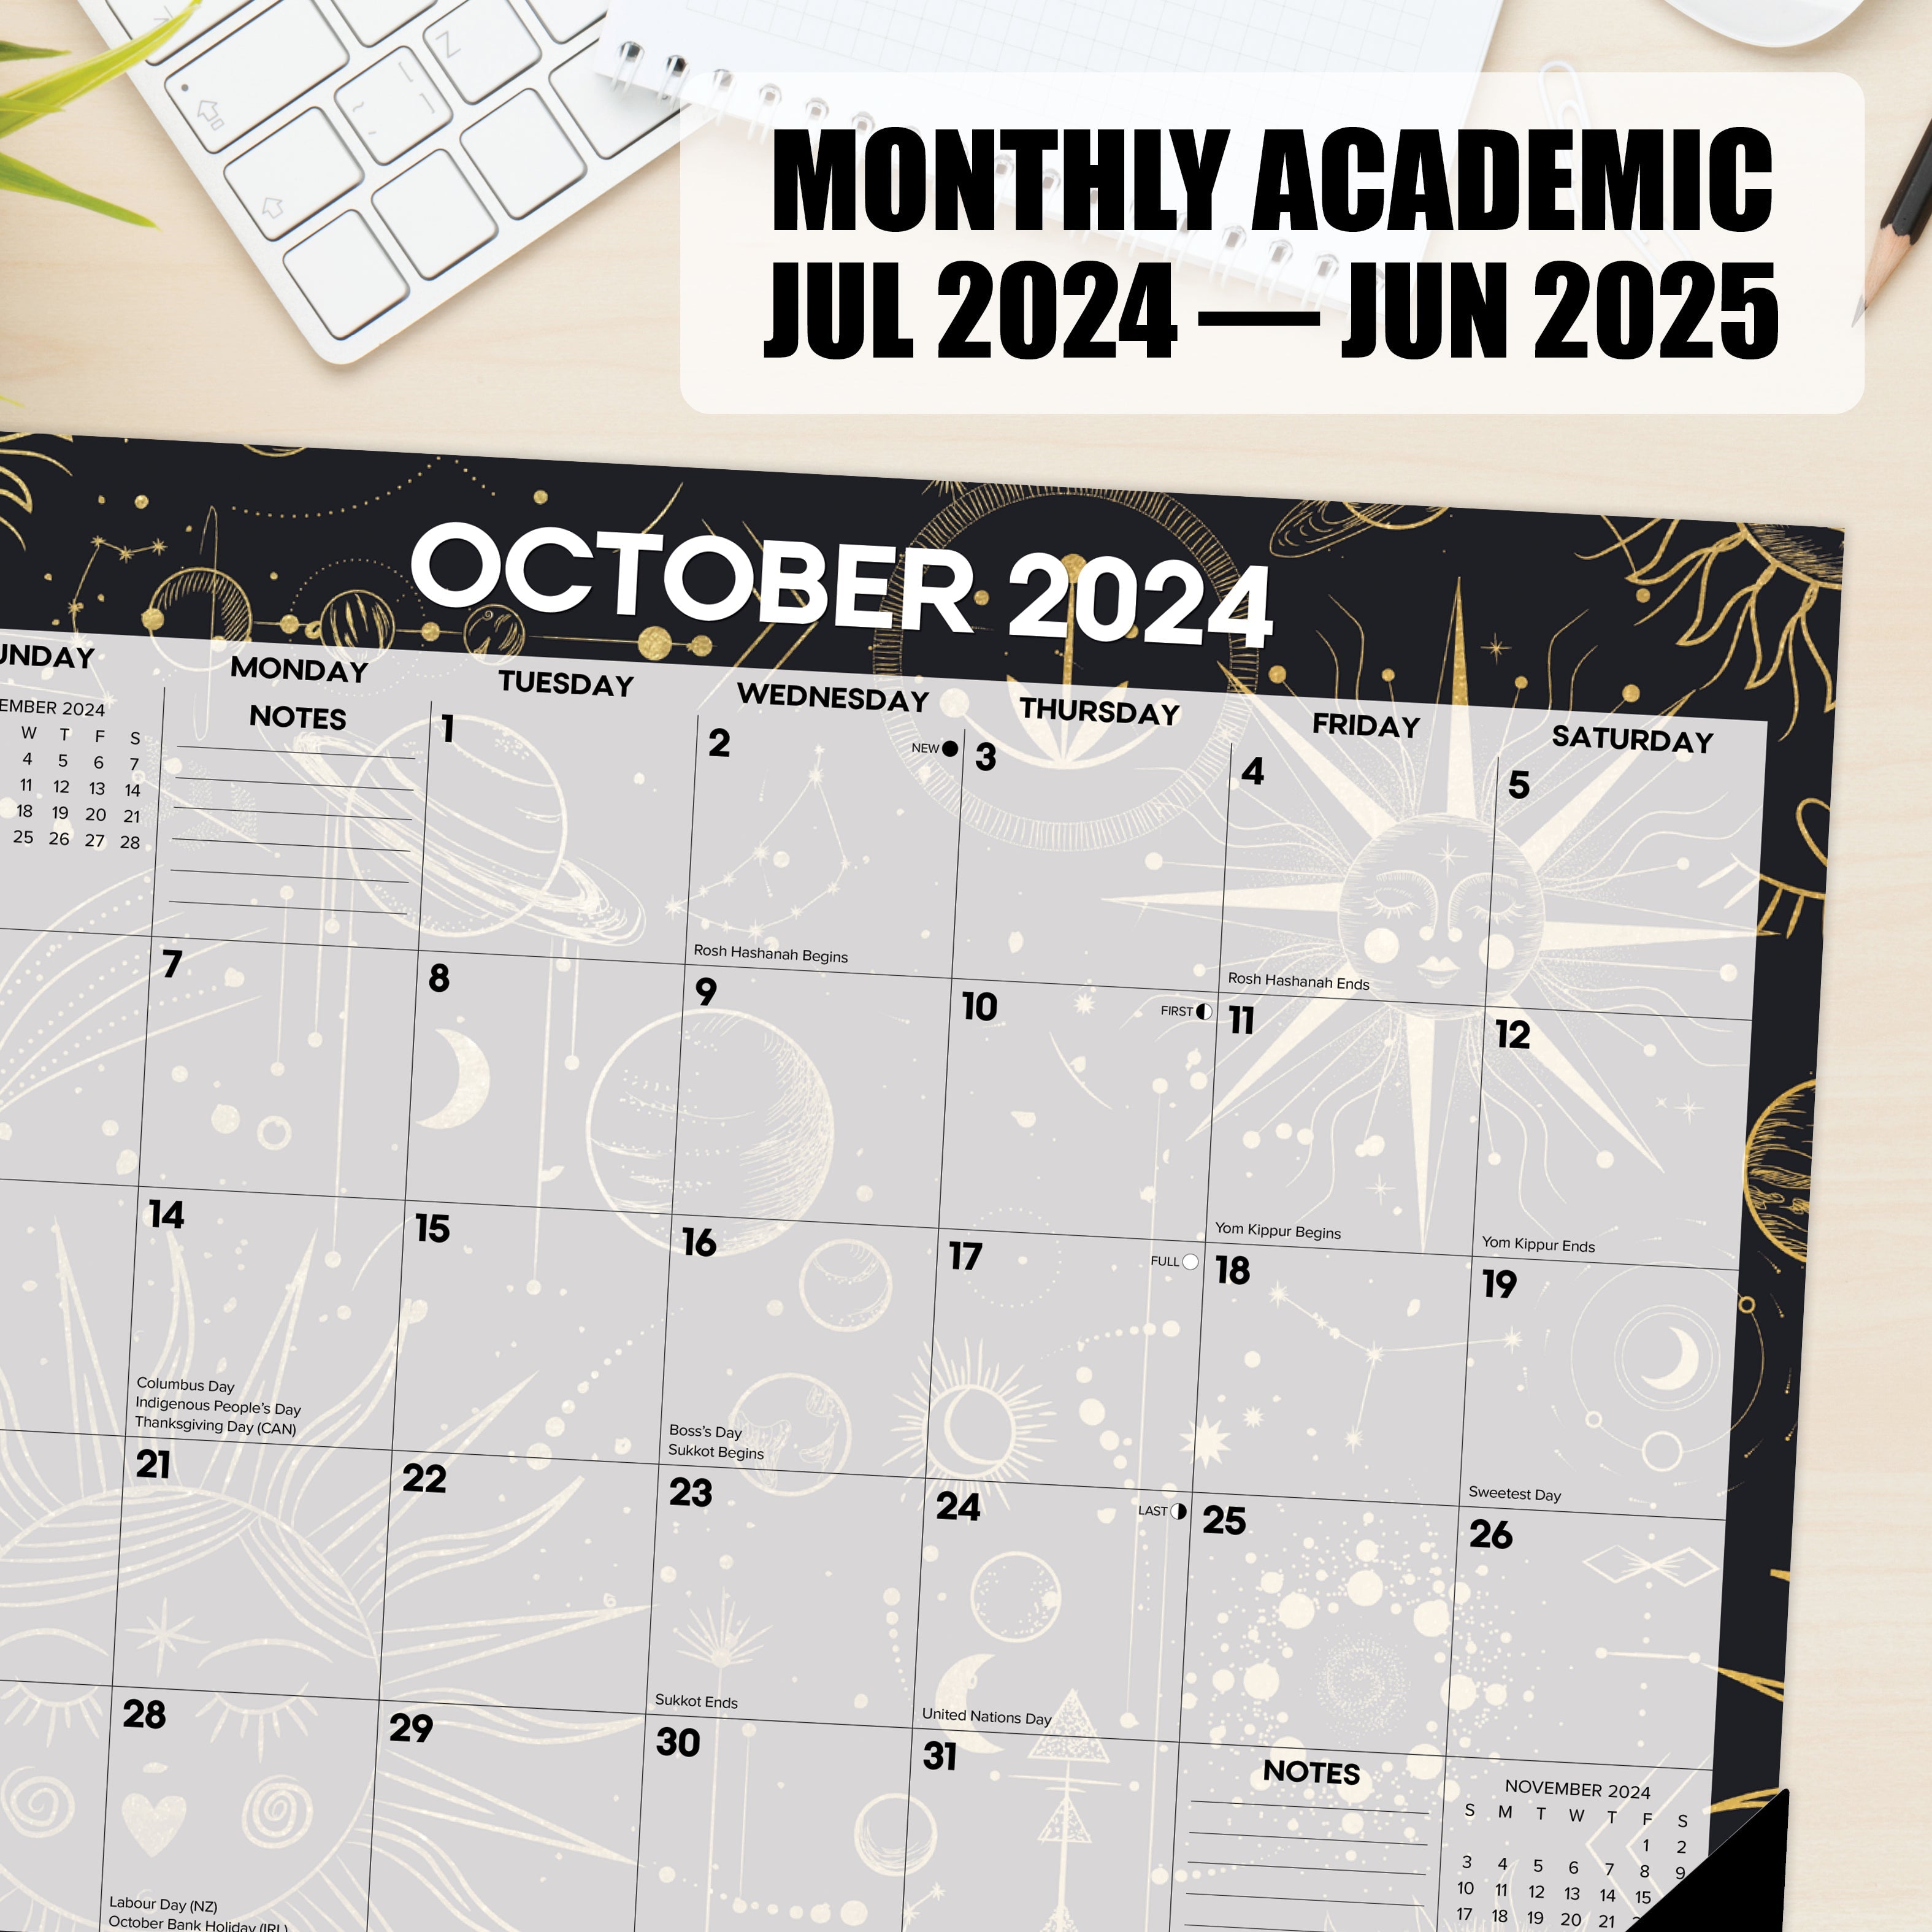 July 2024 - June 2025 Celestial - Large Monthly Desk Pad Academic Calendar